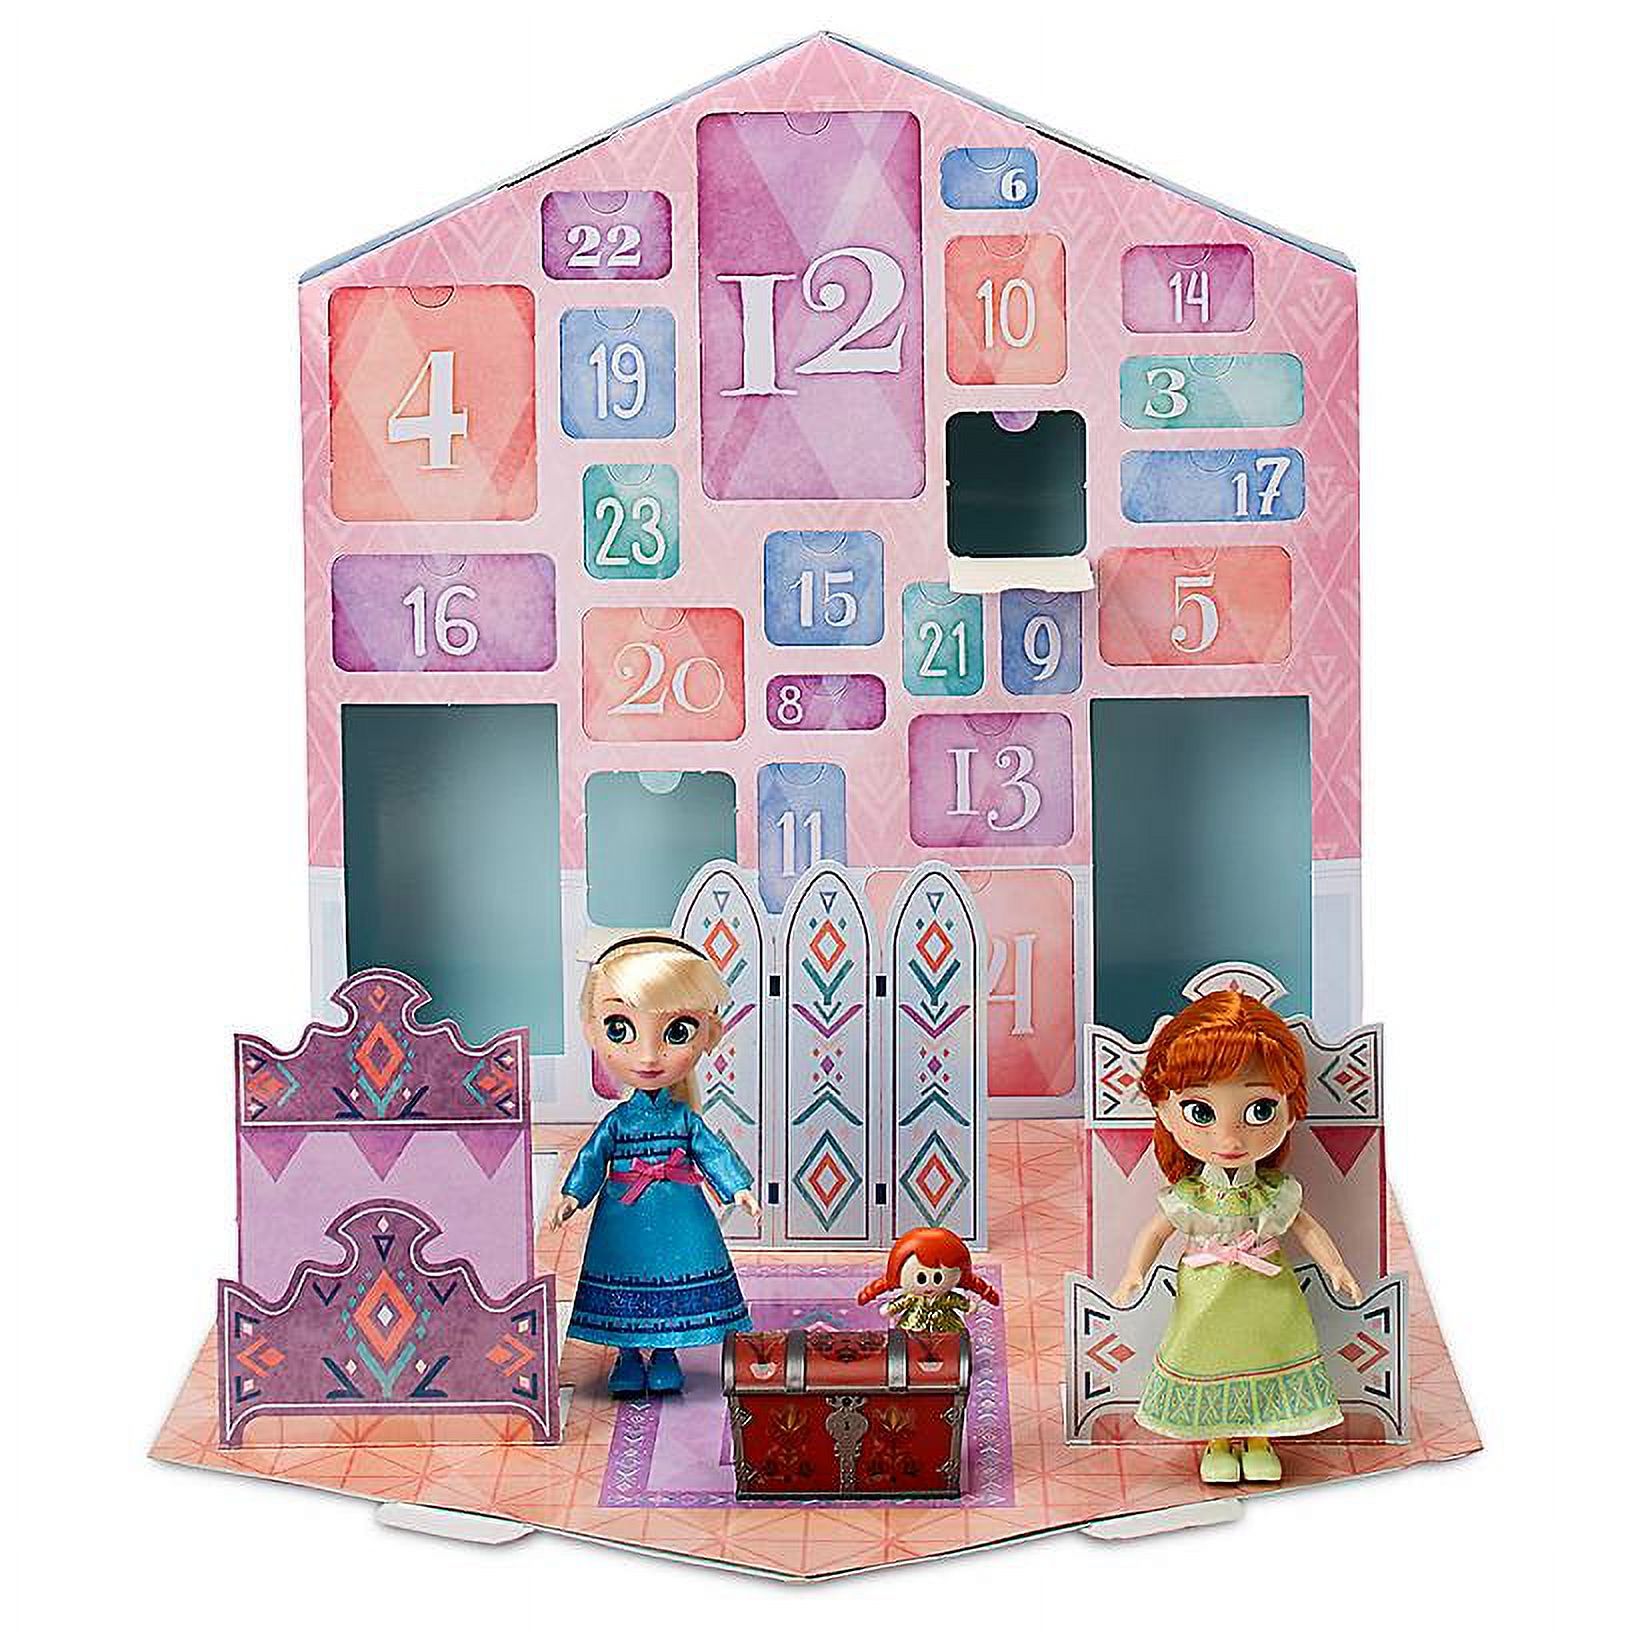 Disney Store Elsa Anna Frozen 2 Advent Calendar New with Box - image 2 of 4